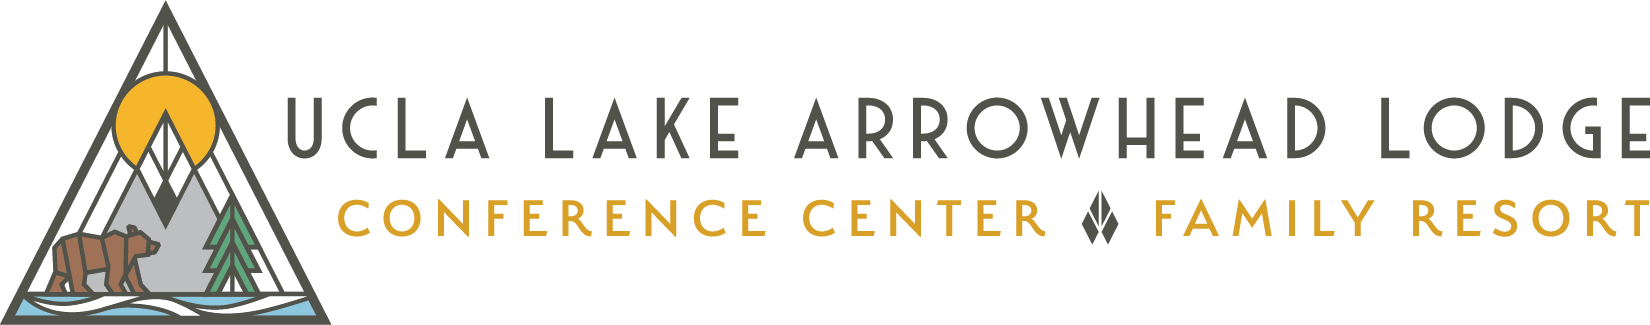 UCLA Lake Arrowhead Lodge logo - color